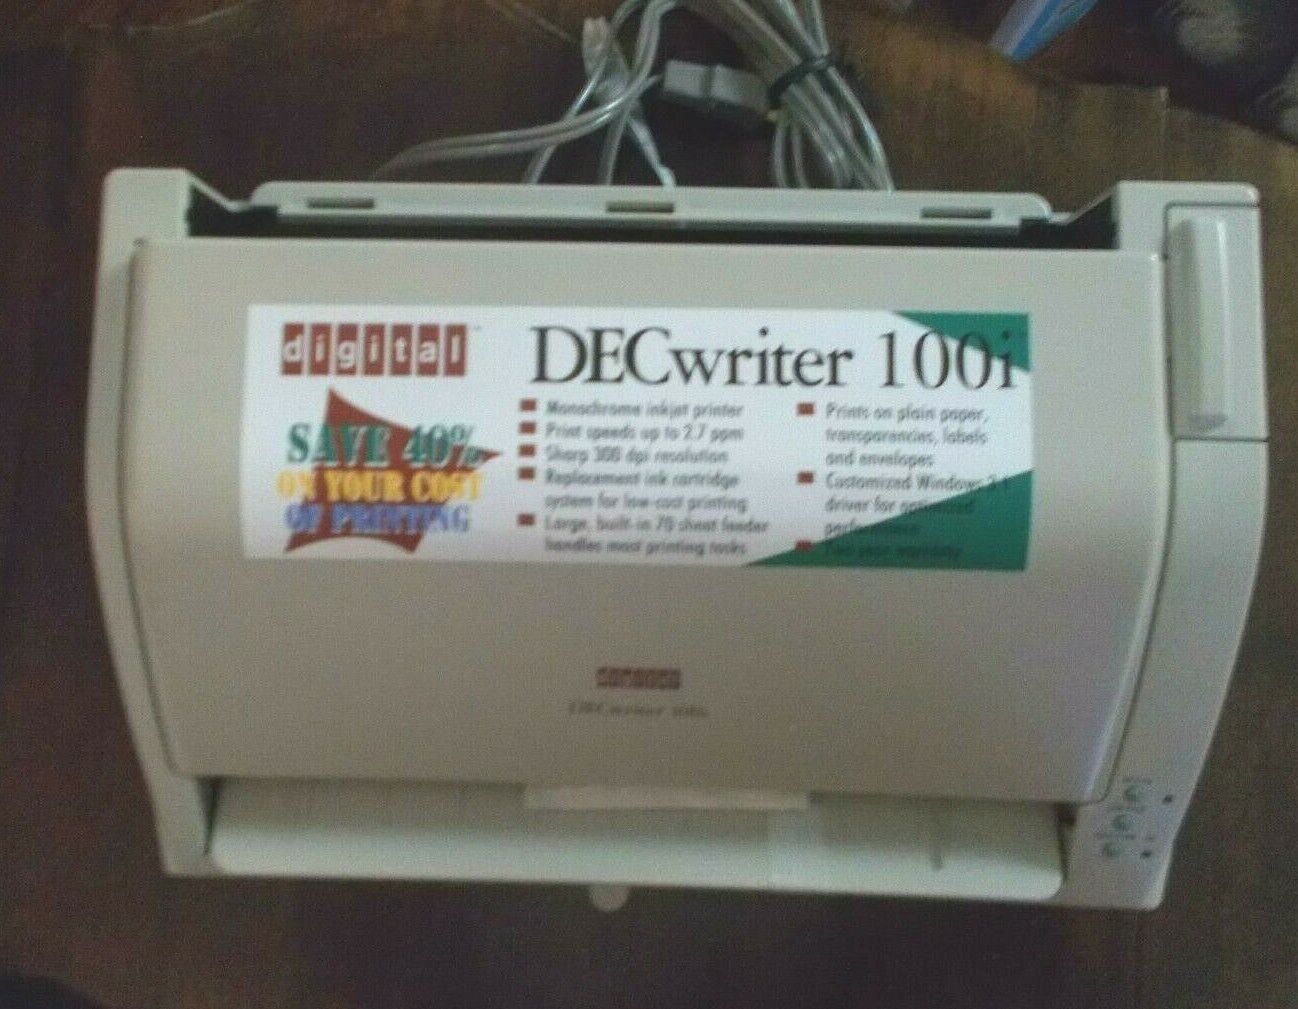 Decwriter 100i Vintage Monochrome Inkjet Printer New in Open Box w/ Manuals